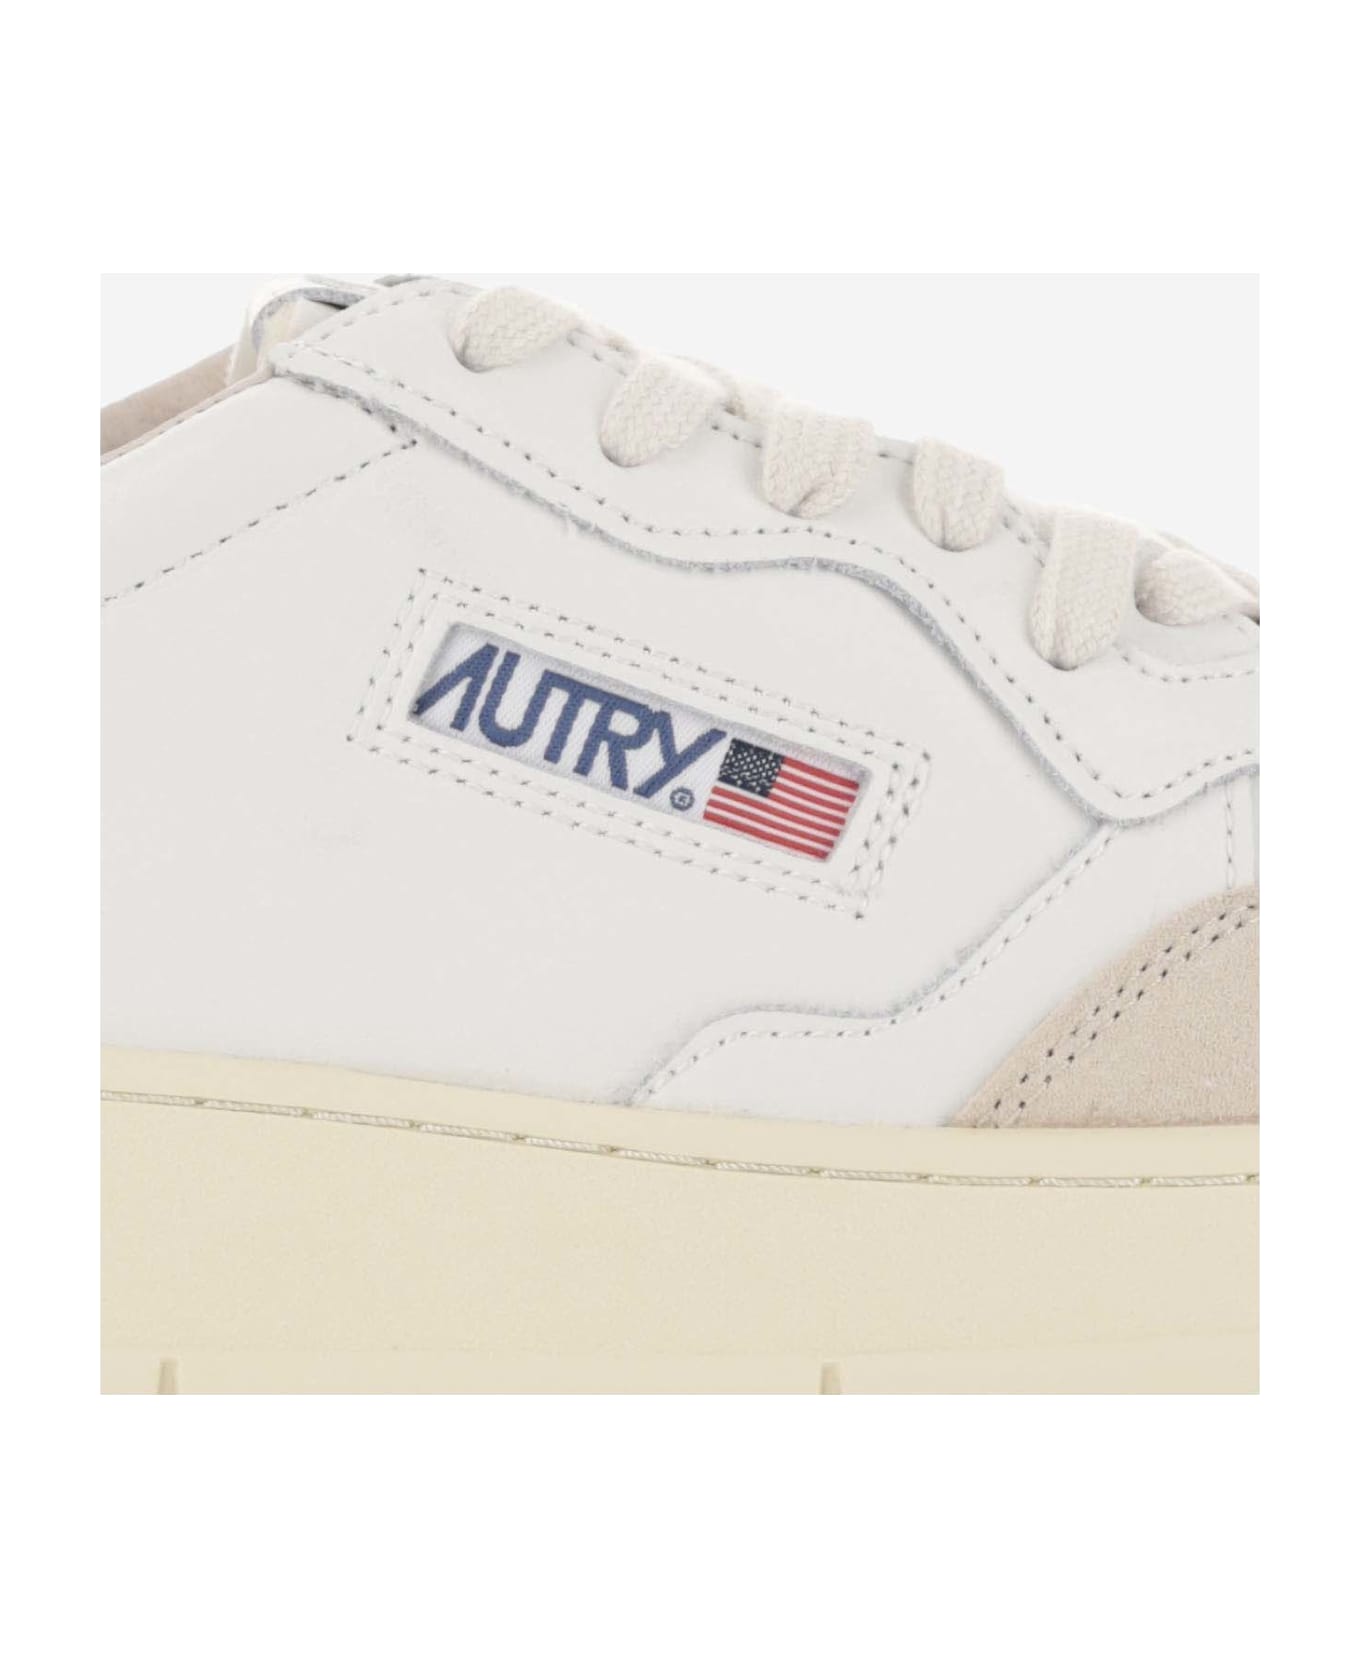 Autry Low Medalist Sneakers - Wht/lemgra